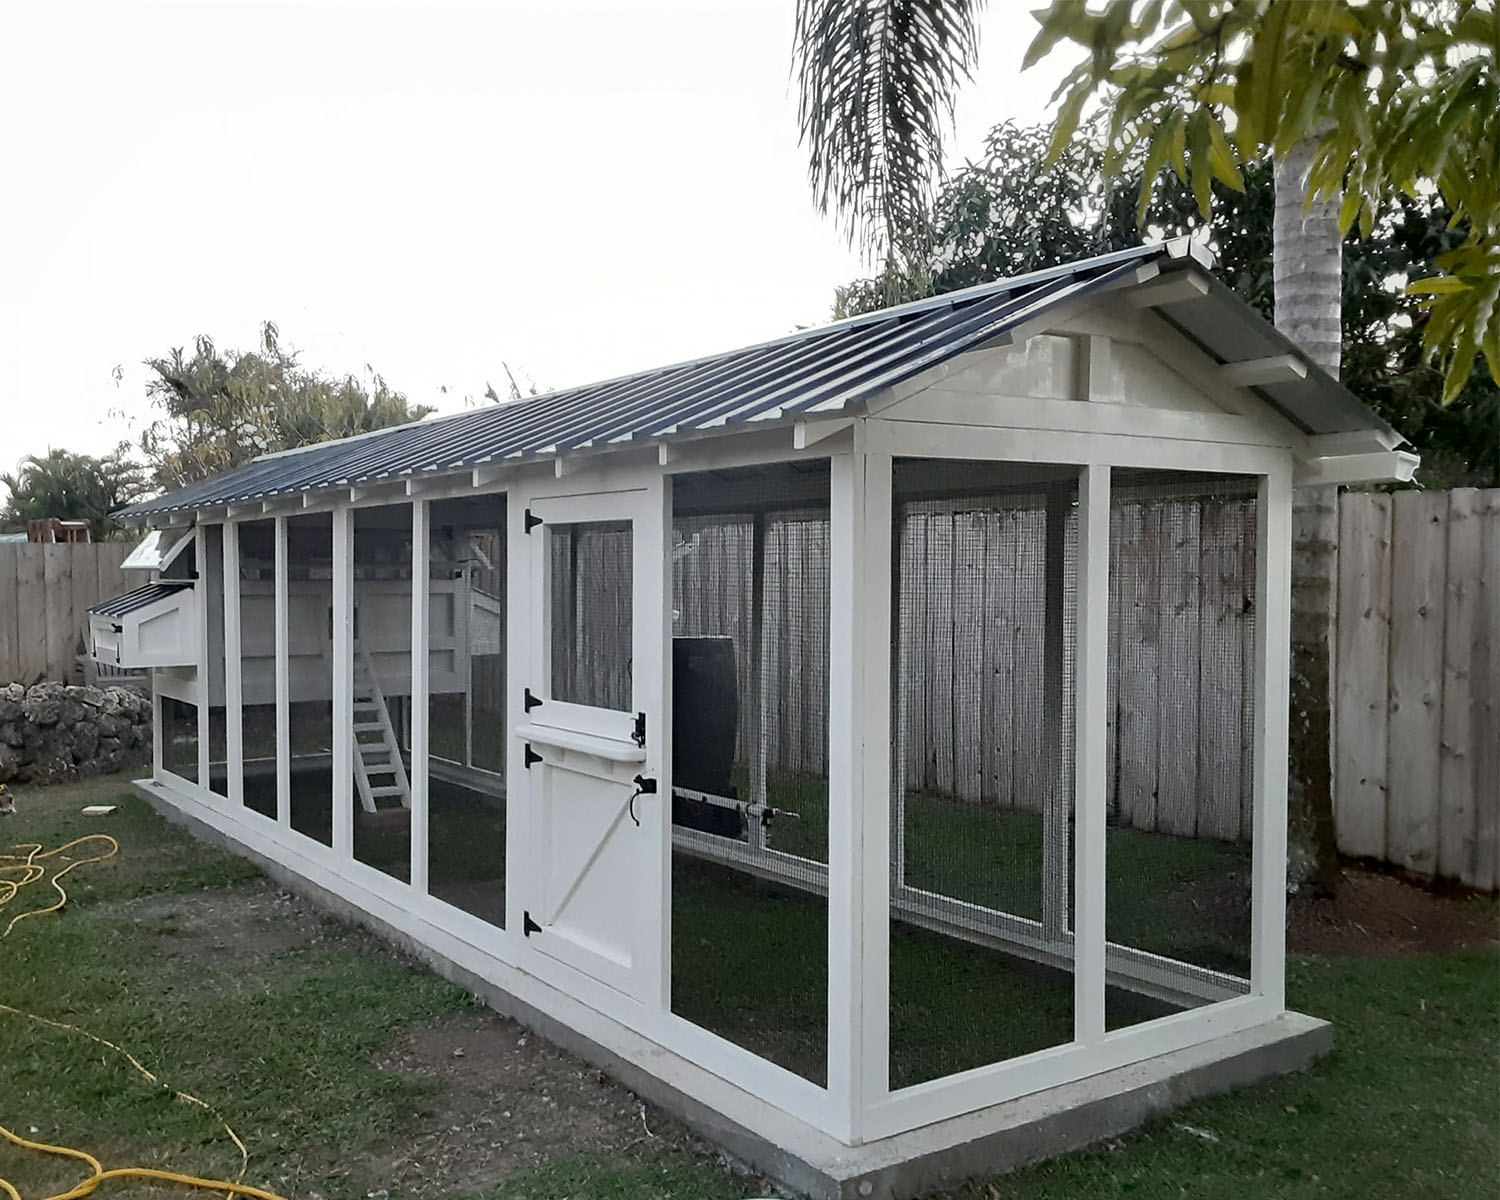 6×24 American Coop in Miami, Florida with Dutch door built on concrete base